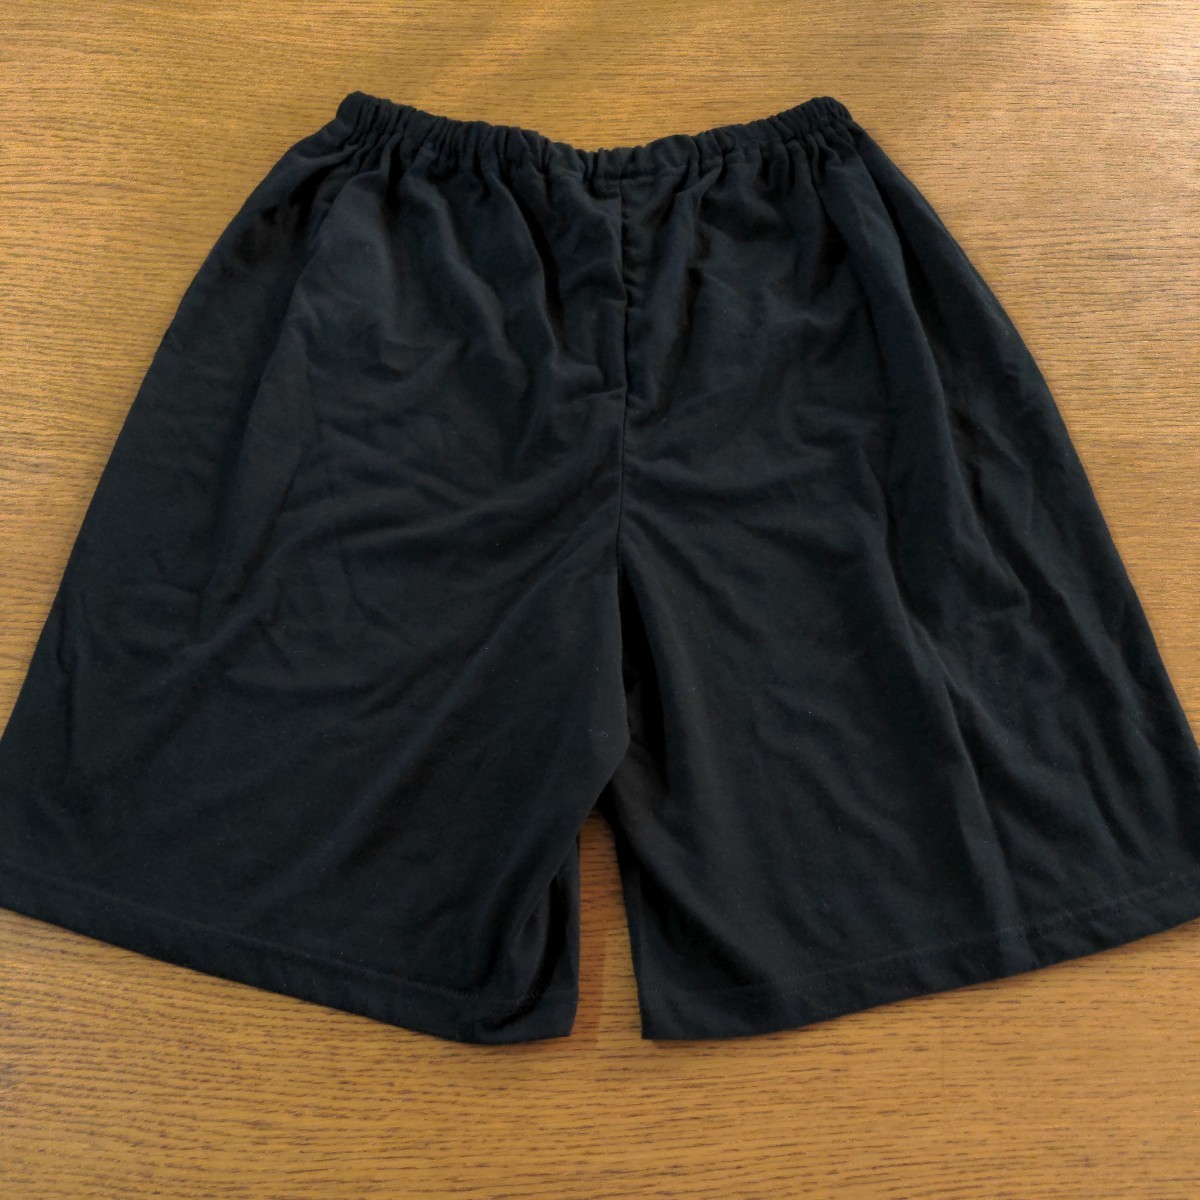 W* новый товар * Rilakkuma * короткий рукав * половина брюки * пижама *160cm* окантовка рисунок * чёрный цвет * для девочки *No.1447